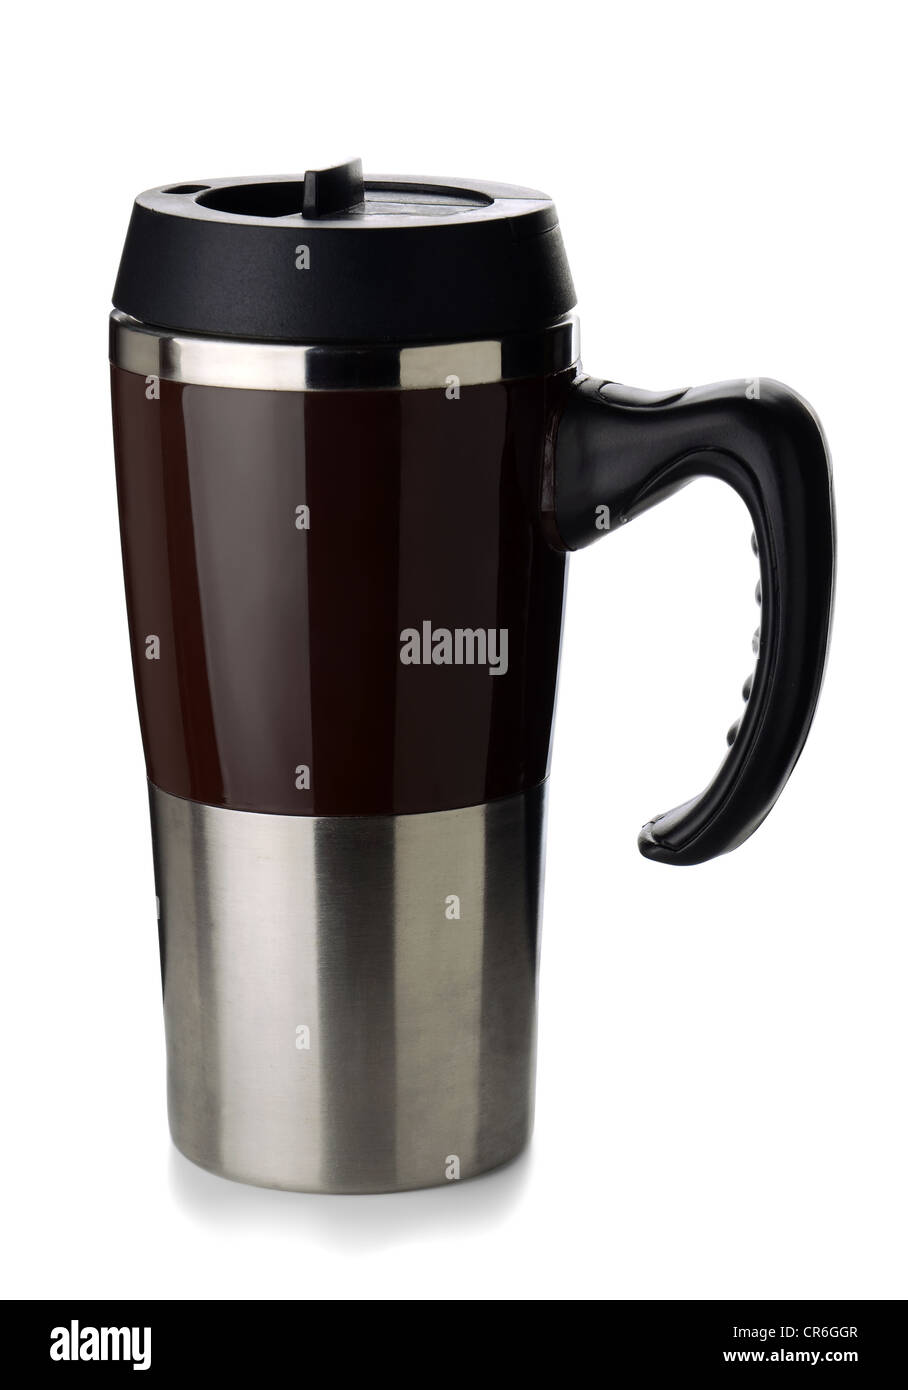 https://c8.alamy.com/comp/CR6GGR/travel-metal-coffee-thermal-mug-isolated-on-white-CR6GGR.jpg